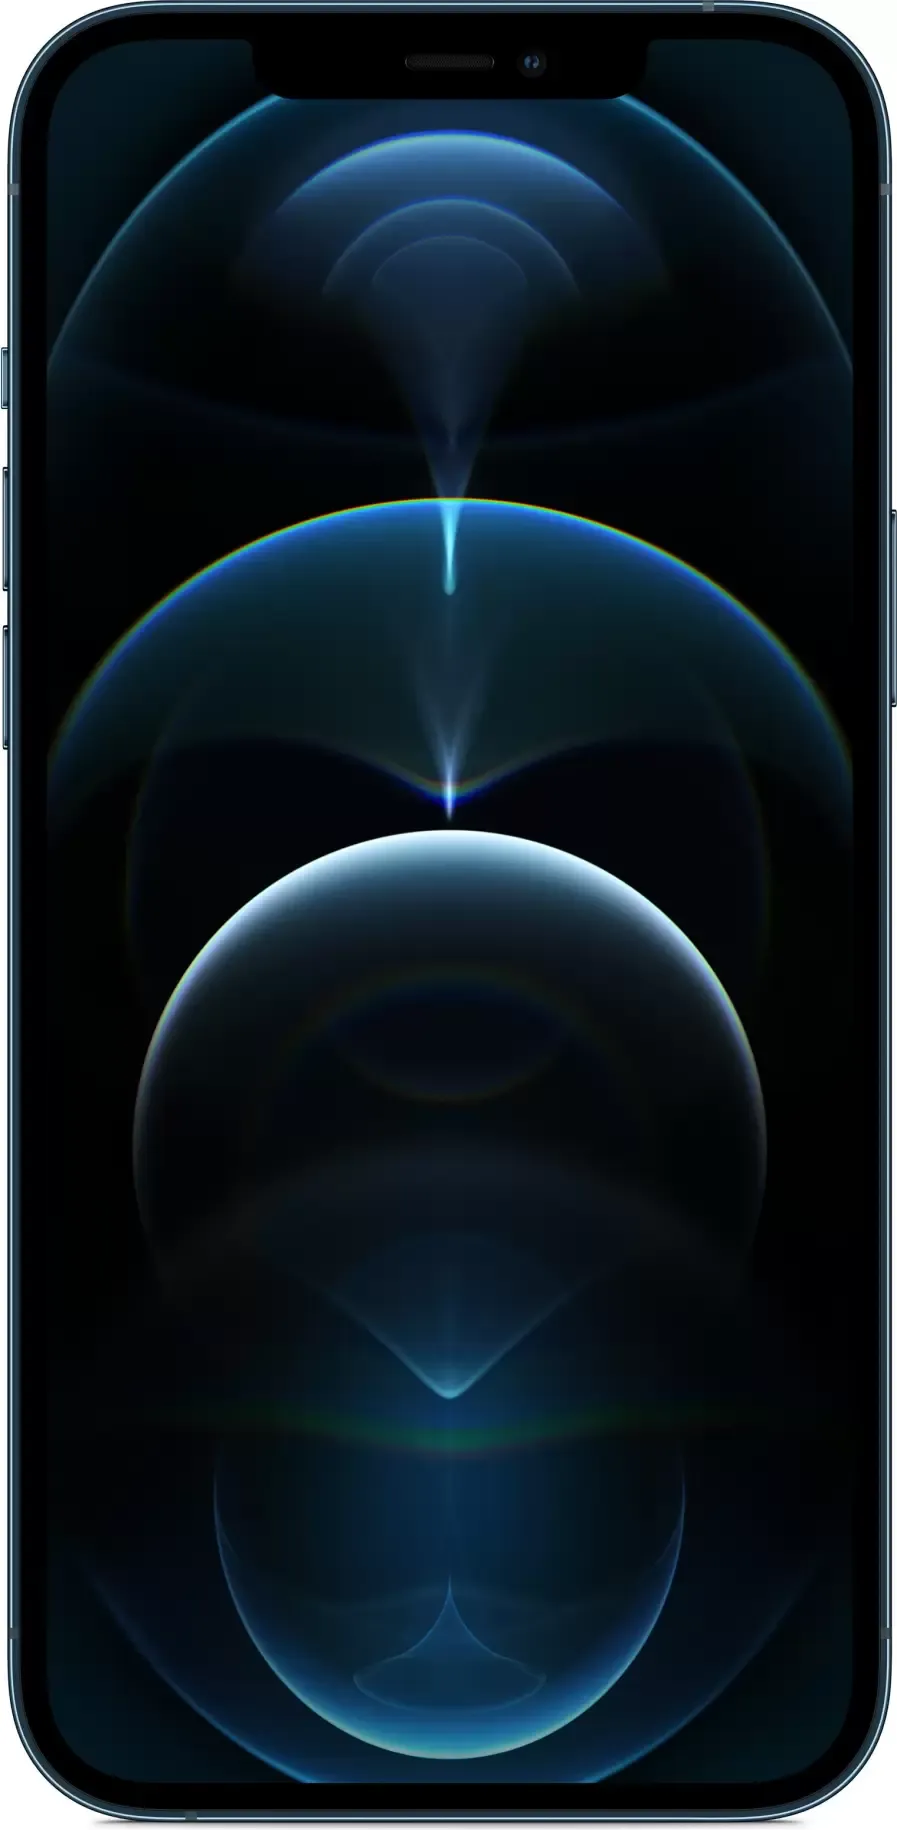 Apple iPhone 12 Pro Max (512GB) slide image 0